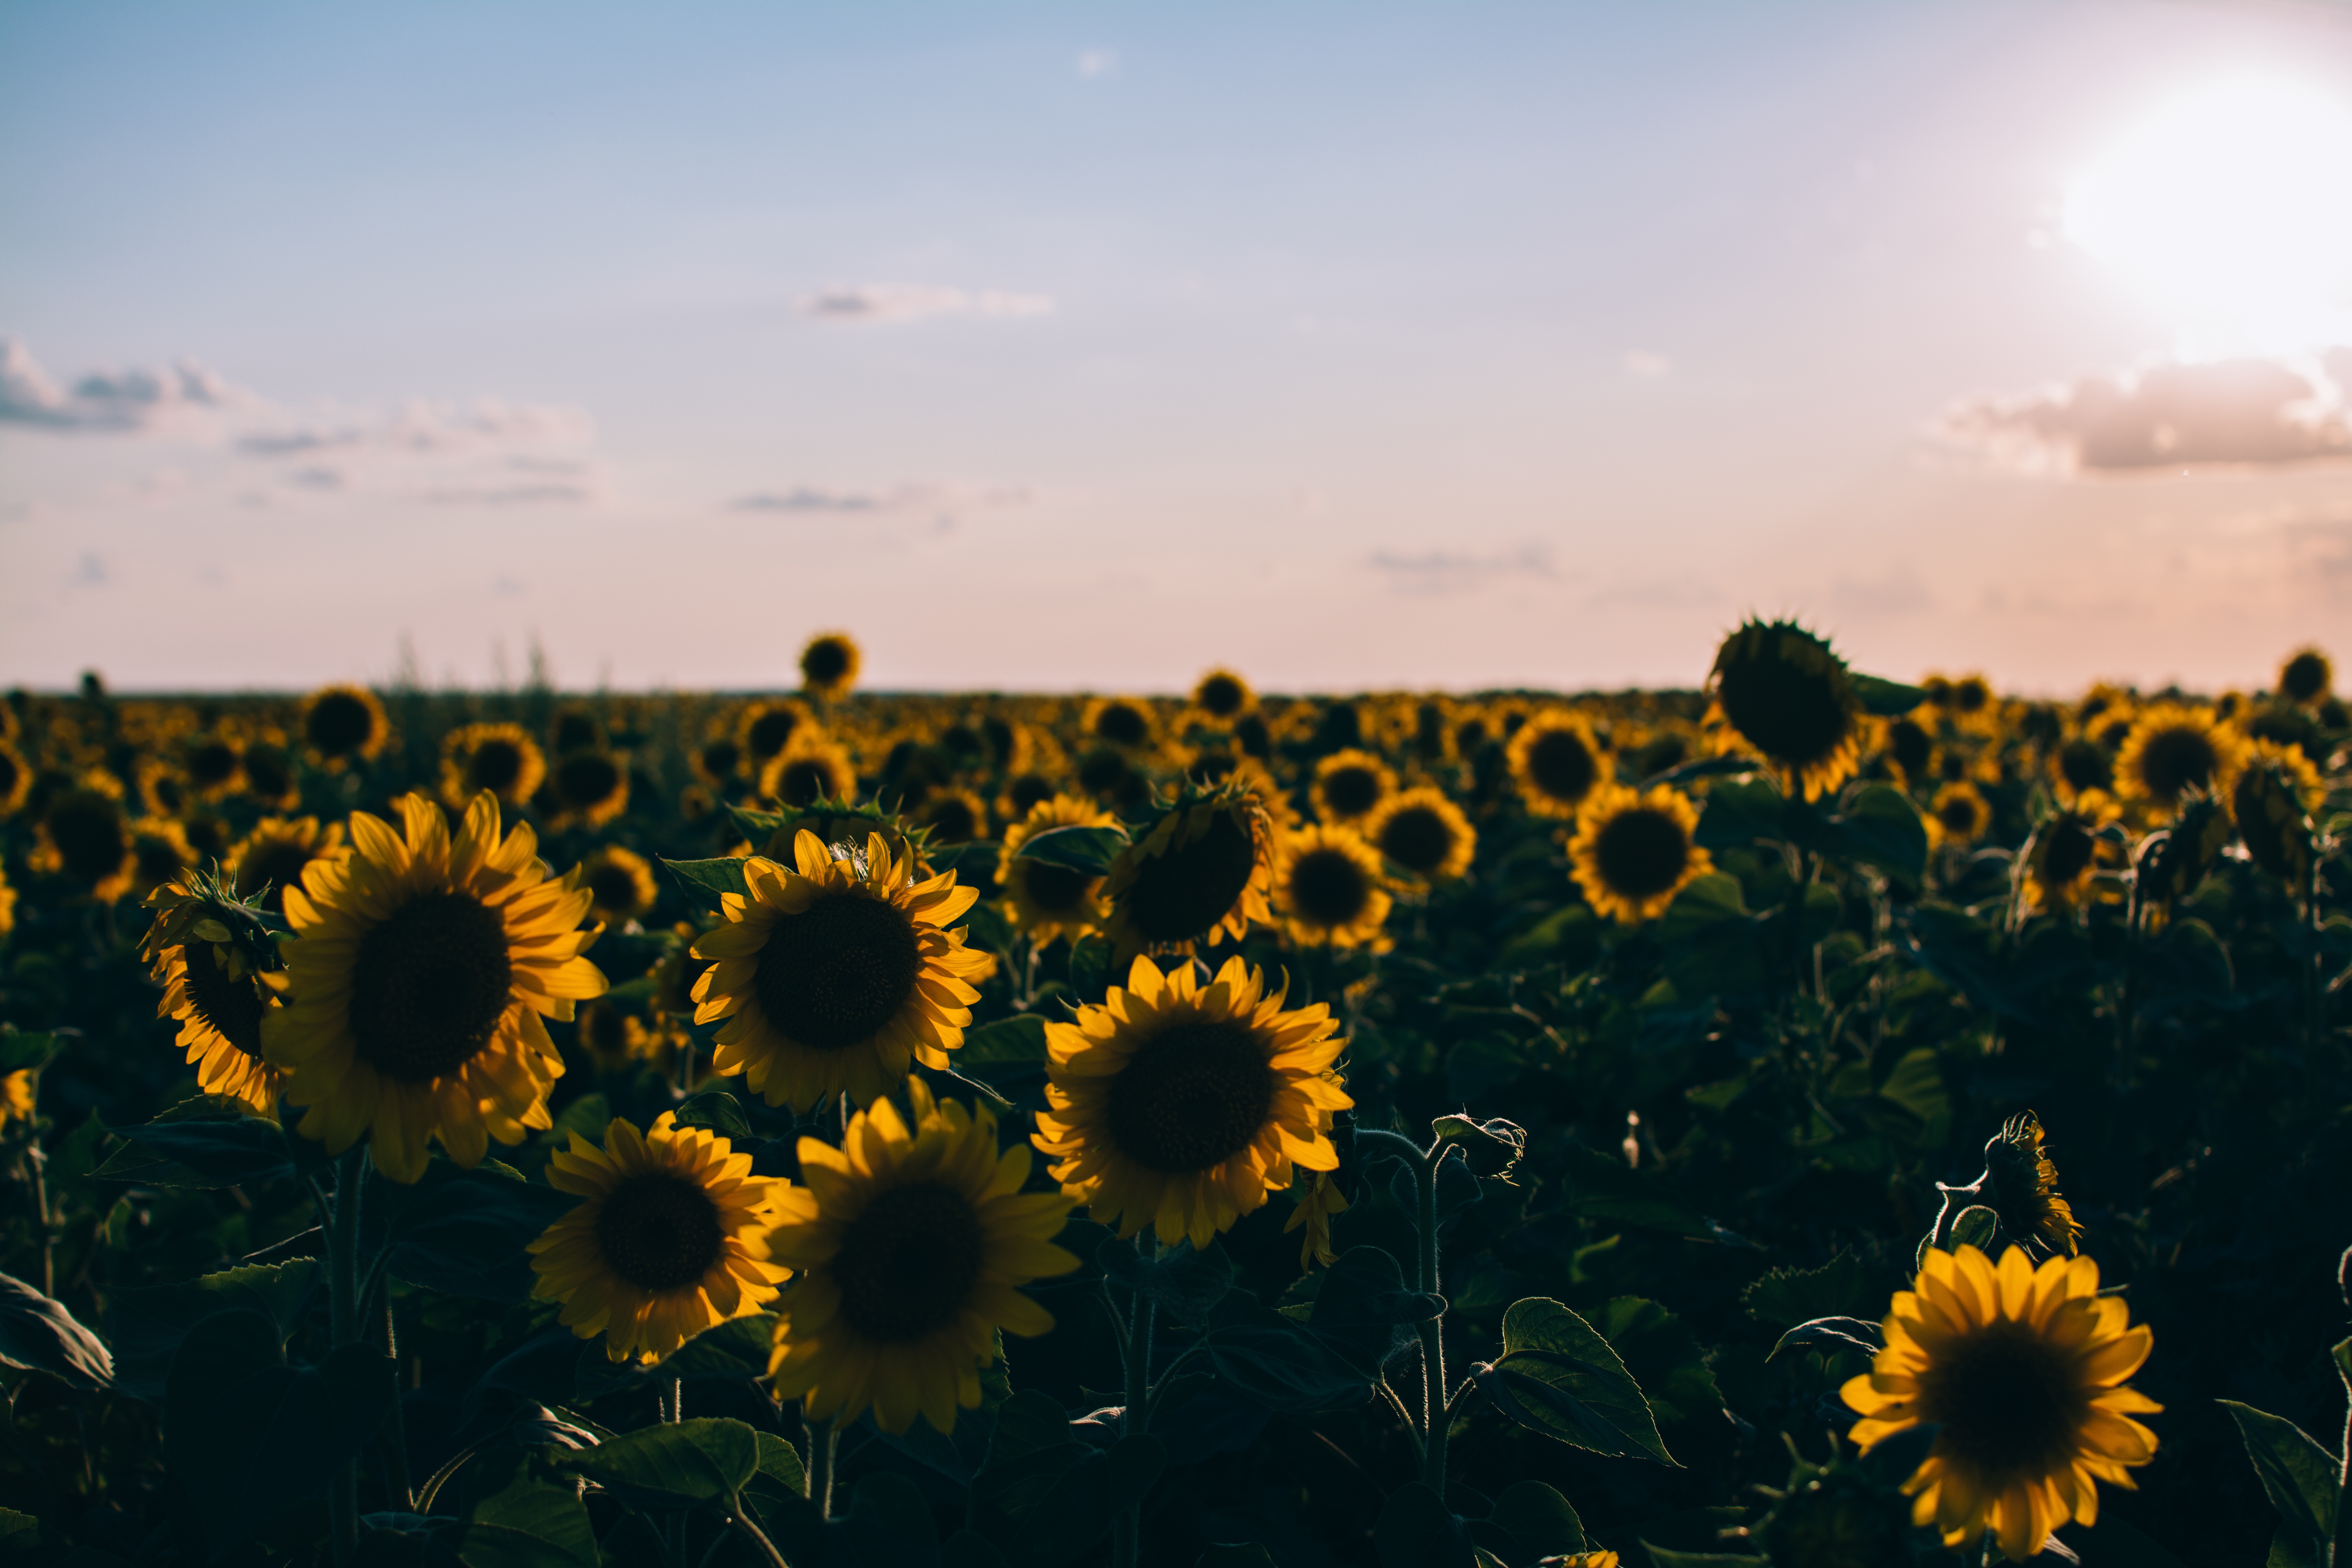 Picalls.com | Field of sunflowers by Rodion Kutsaev.